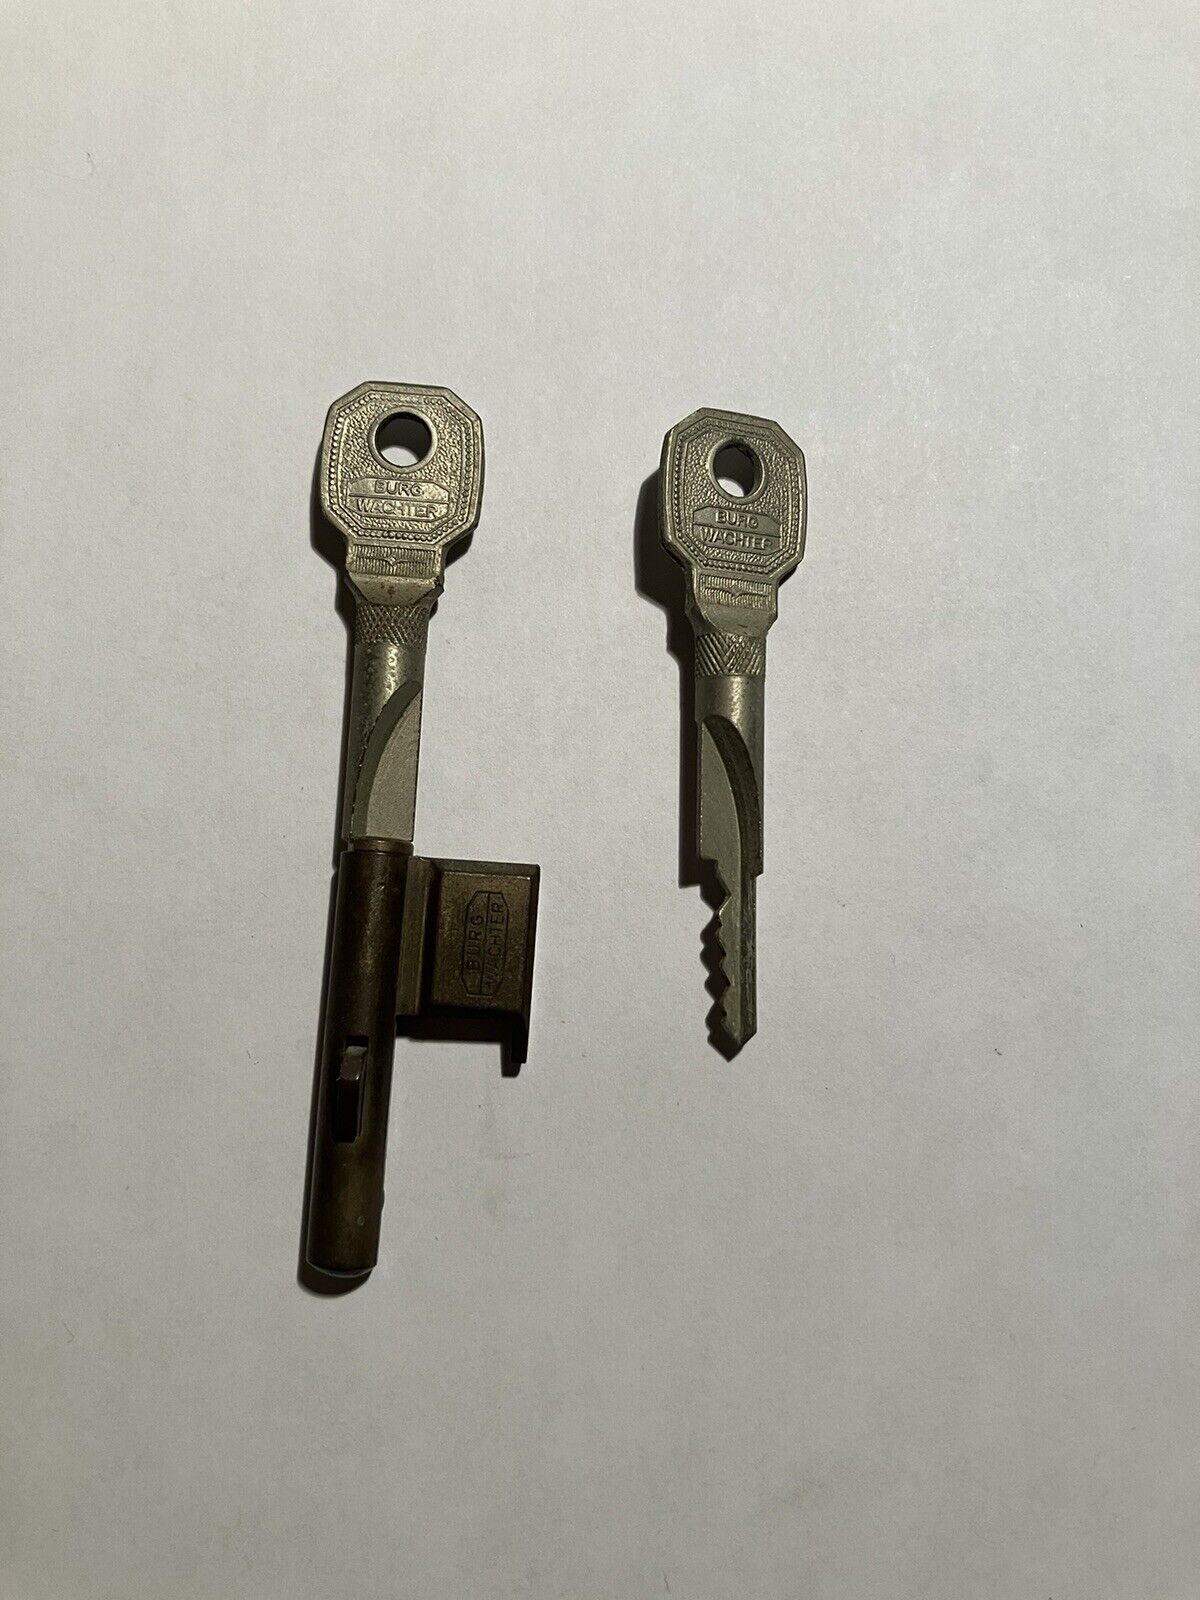 Vintage Burg Wachter Key Lock Keyhole Furniture Door Lock Blocker